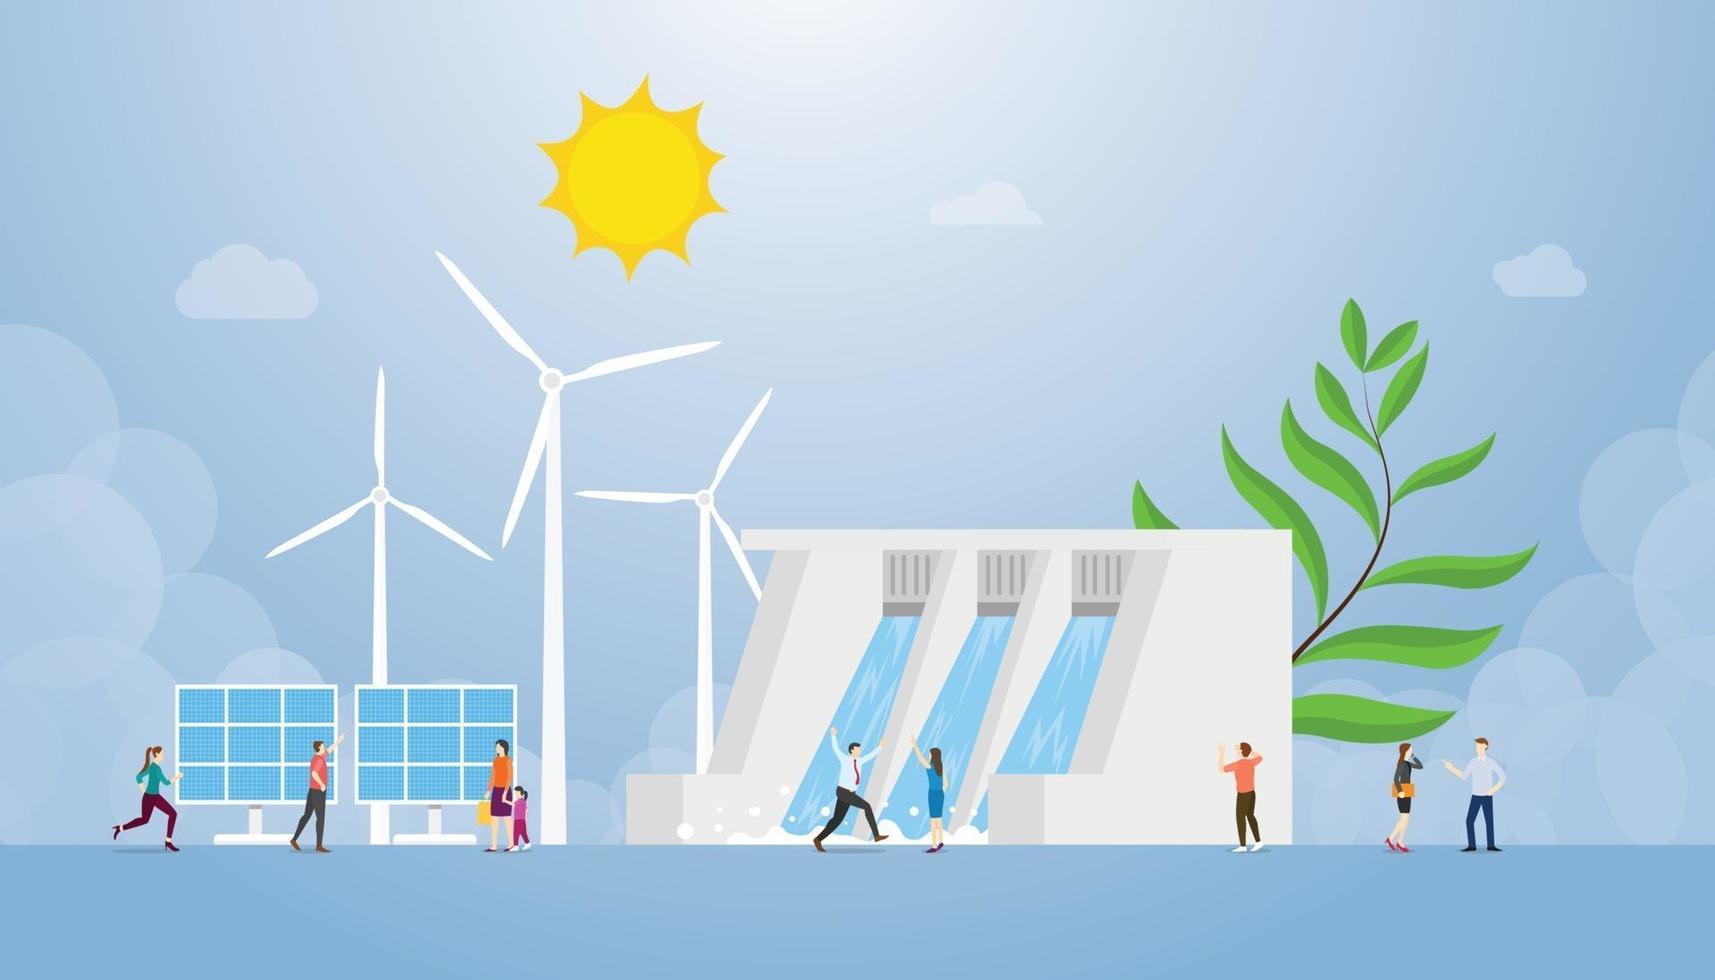 RenewaTech Nexus is a platform serving the community of renewable energy enthusiasts